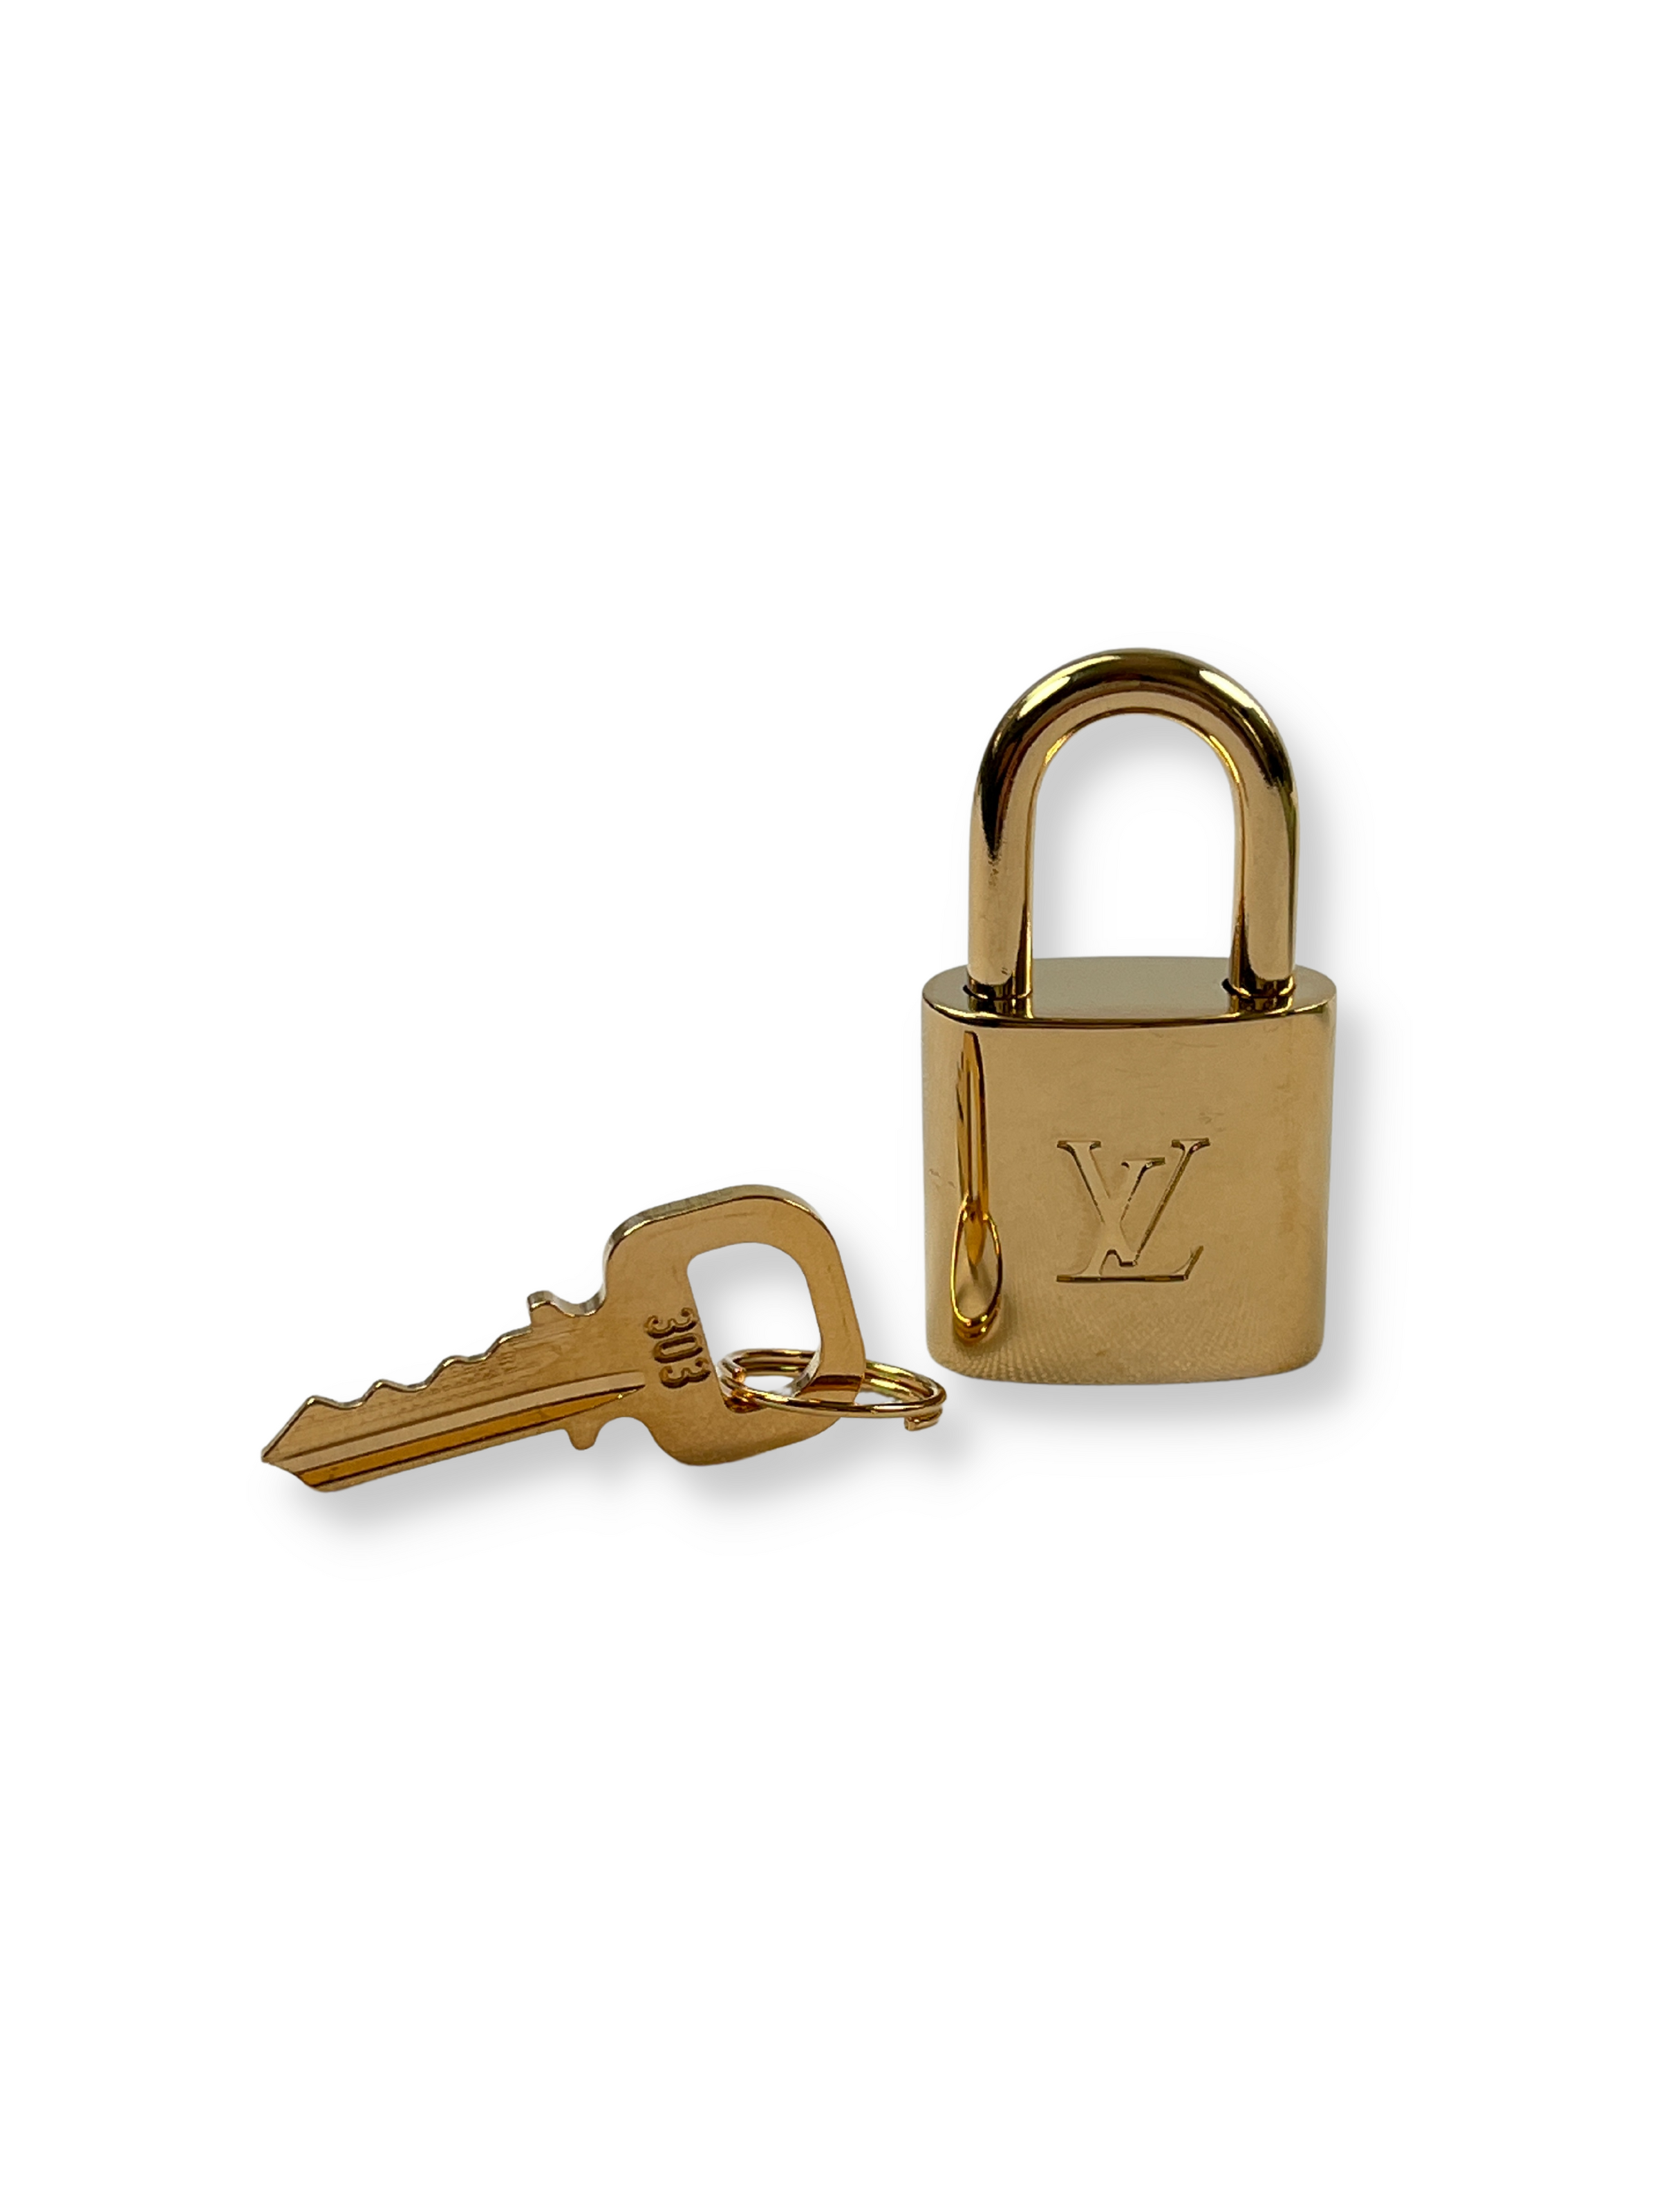 Louis Vuitton Lock # 303 Used Tarnished NO KEY